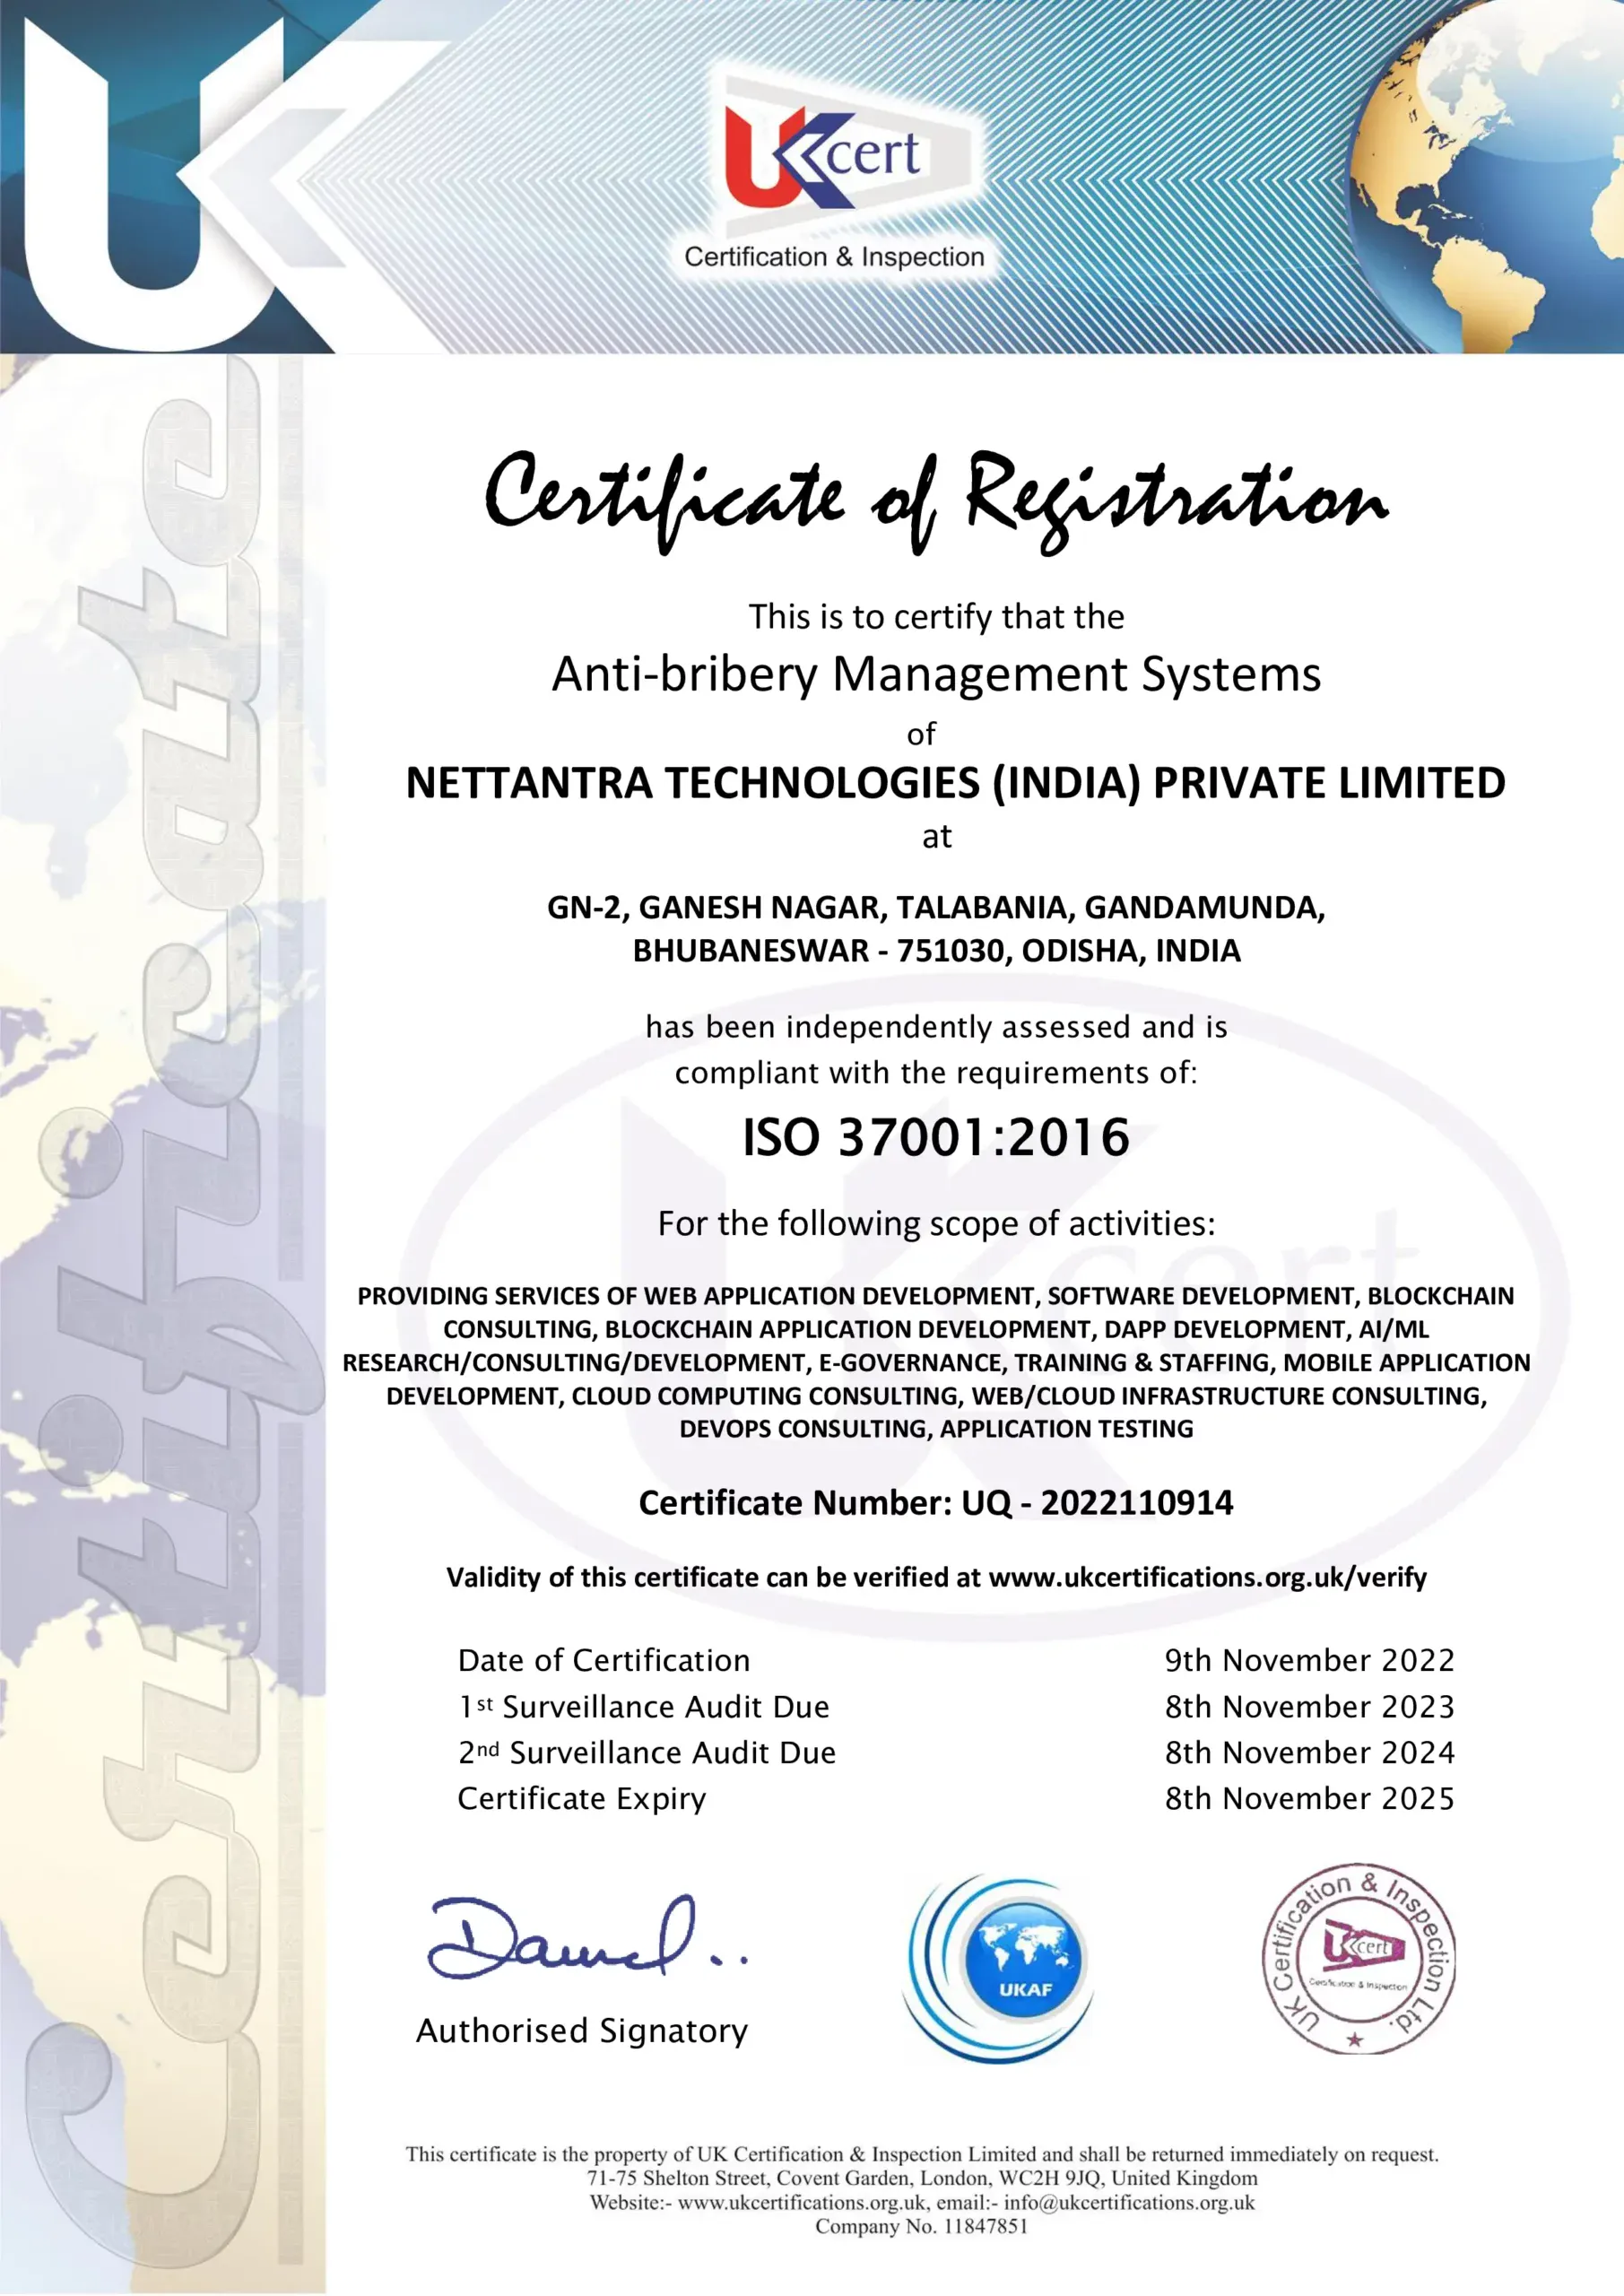 NetTantra - ISO 37001-2016 Certification